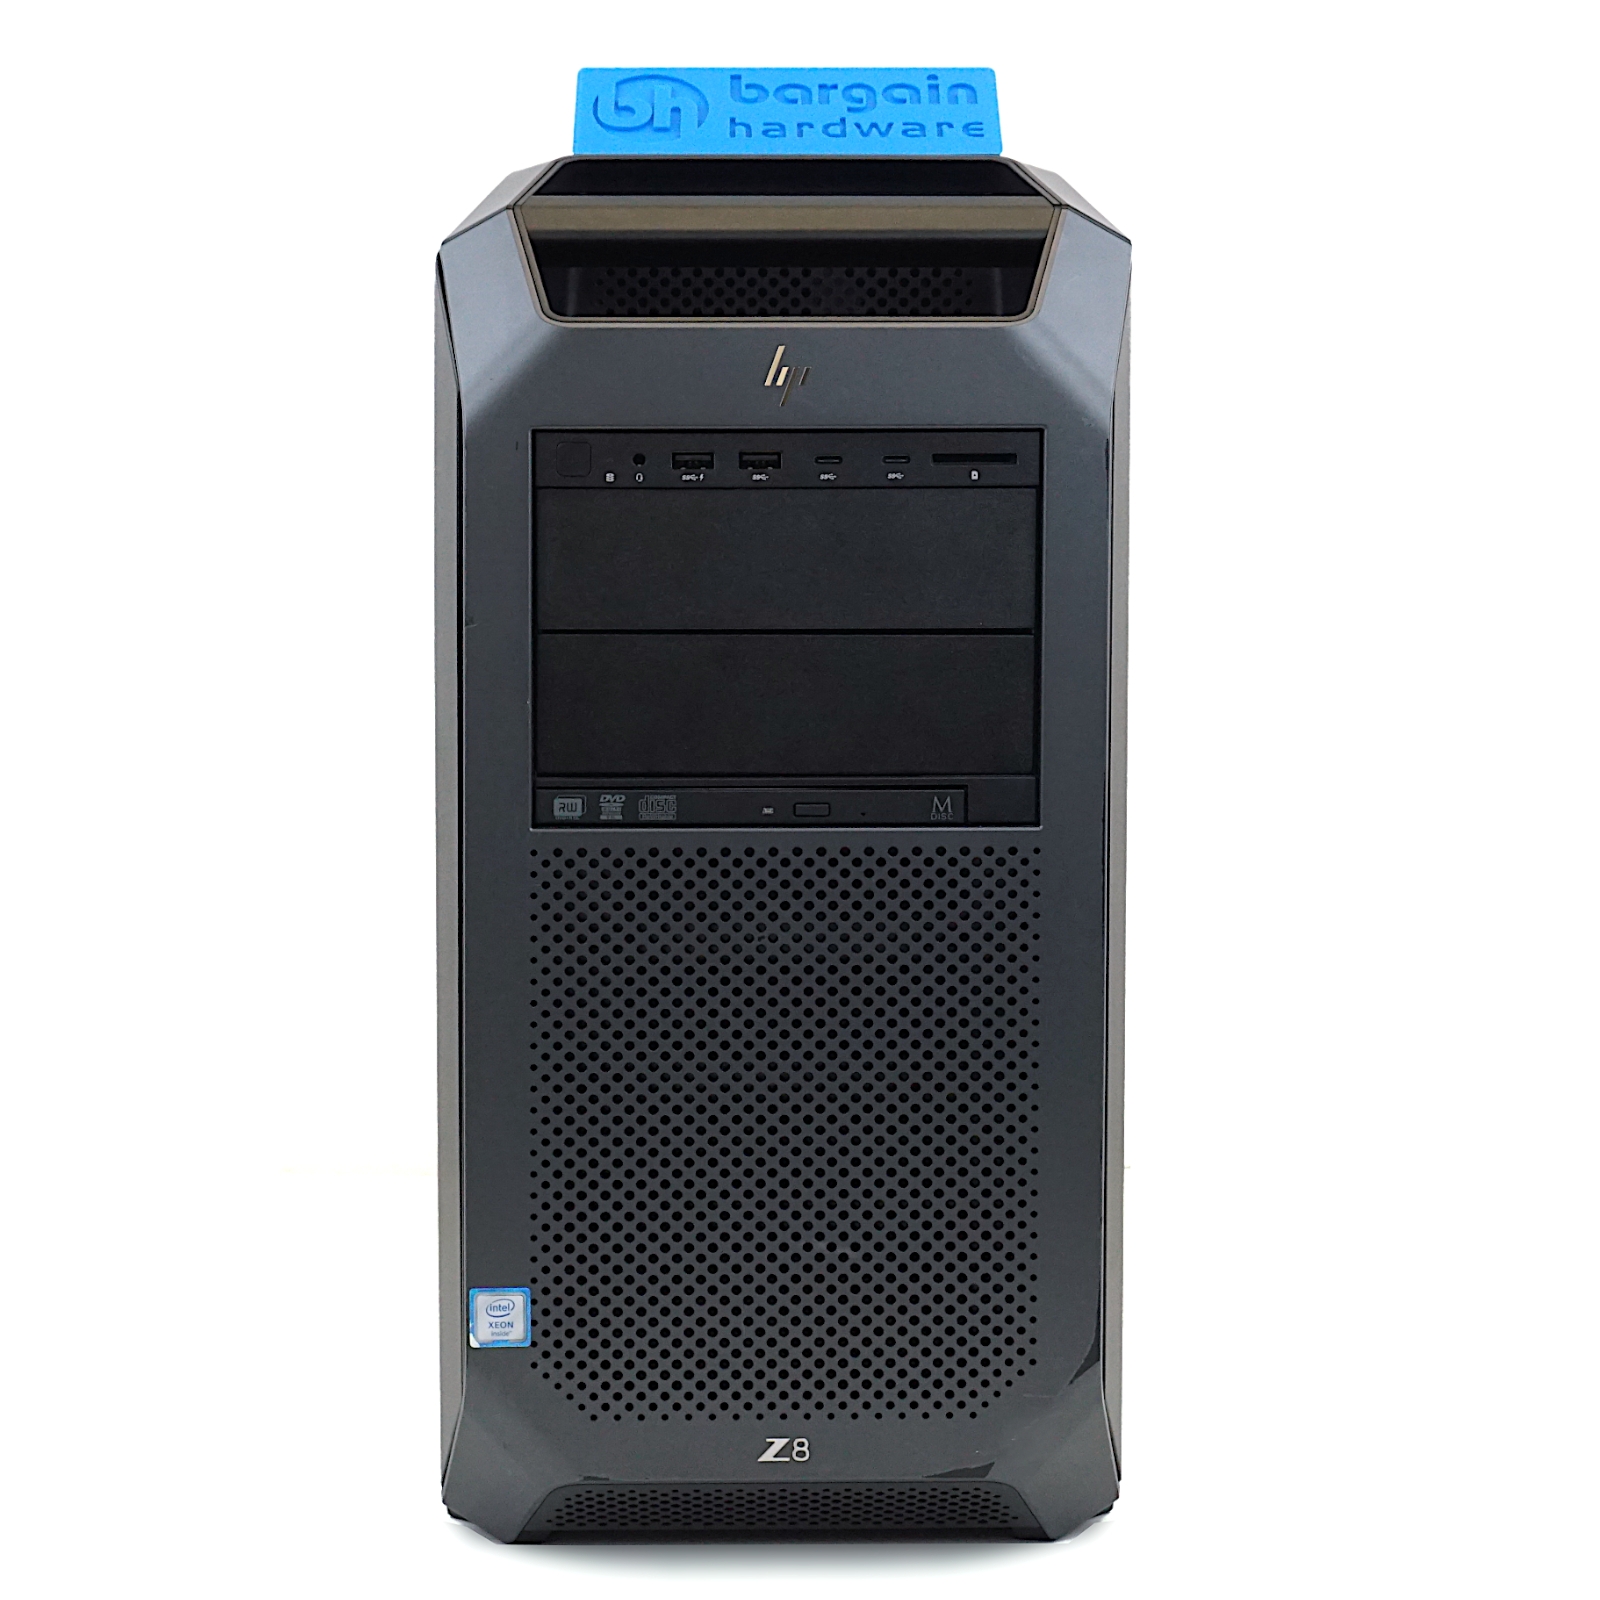 HP Z8 G4 Workstation: 2x Xeon Platinum G2, 512GB DDR4 RAM, Quadro P6000 24GB GFX